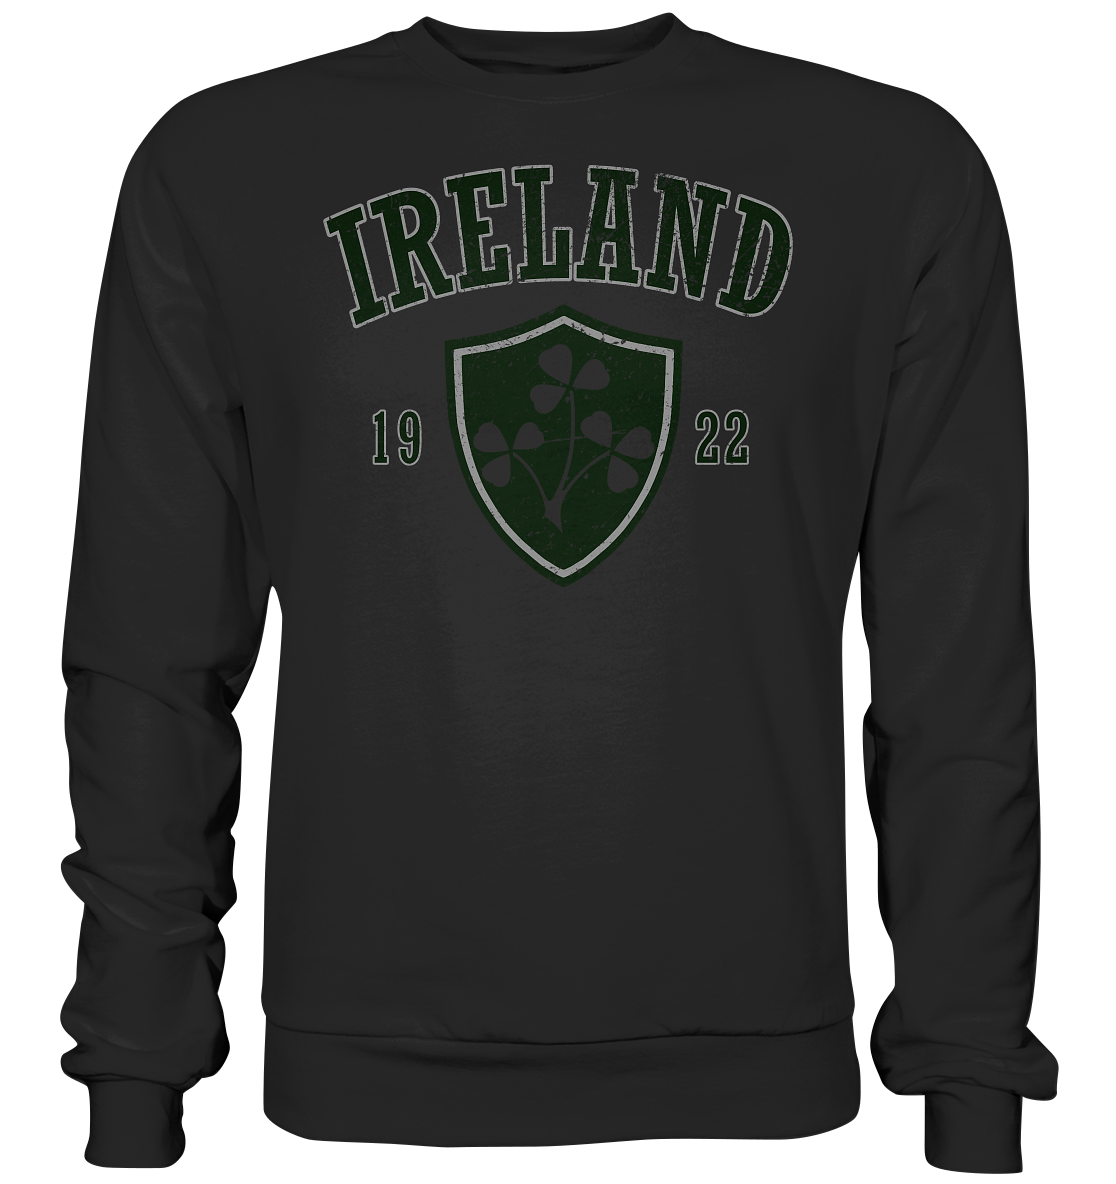 Ireland "Crest 1922" - Premium Sweatshirt